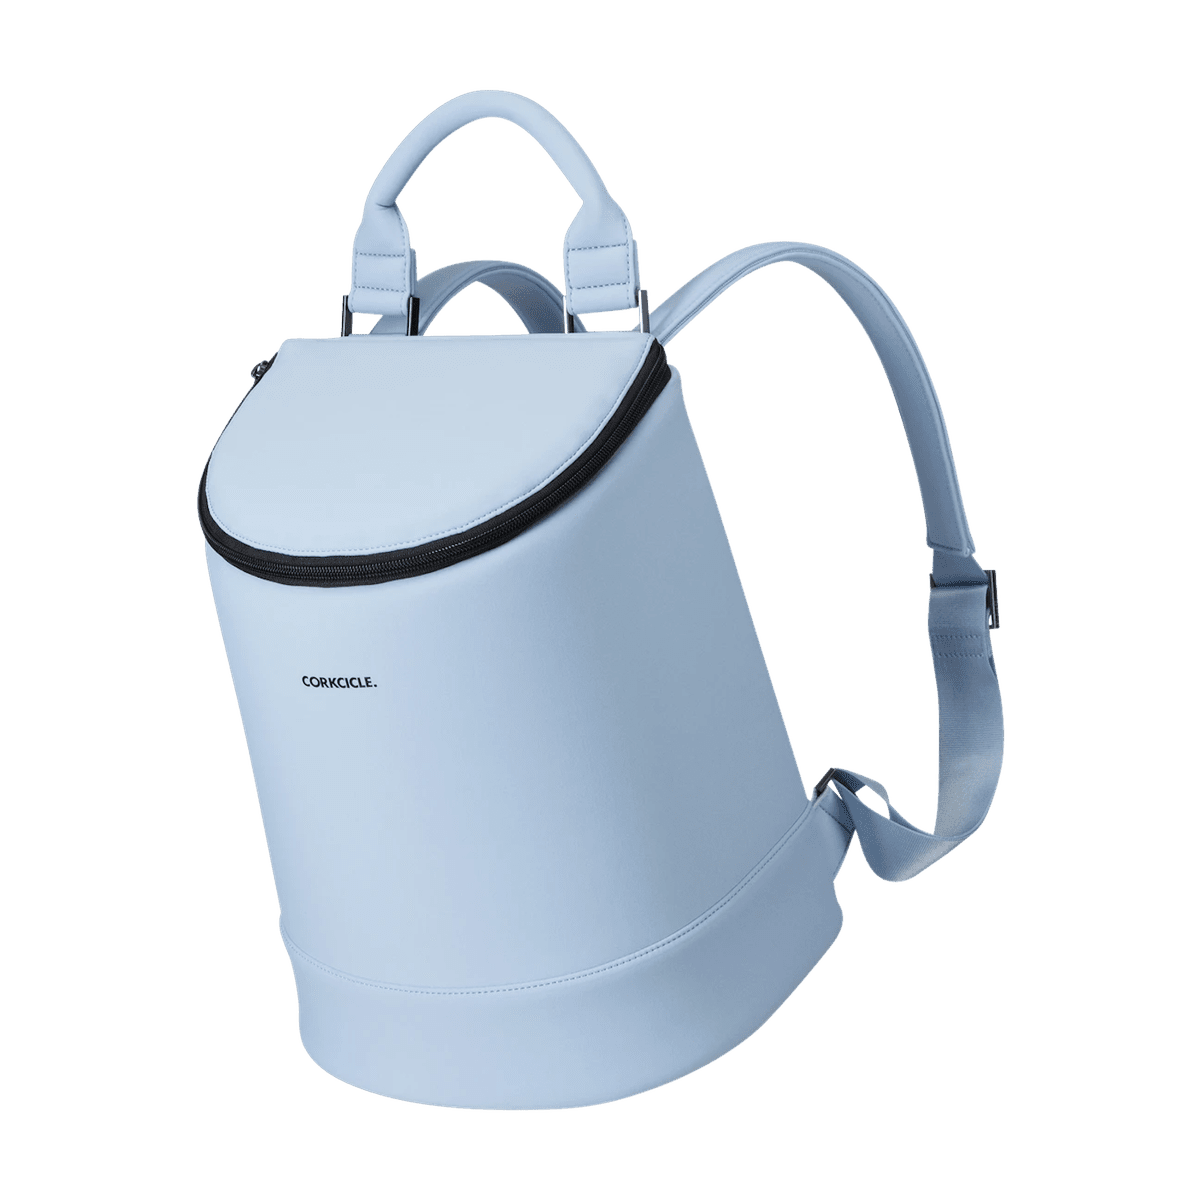 Corkcicle Eola Cooler Bag review